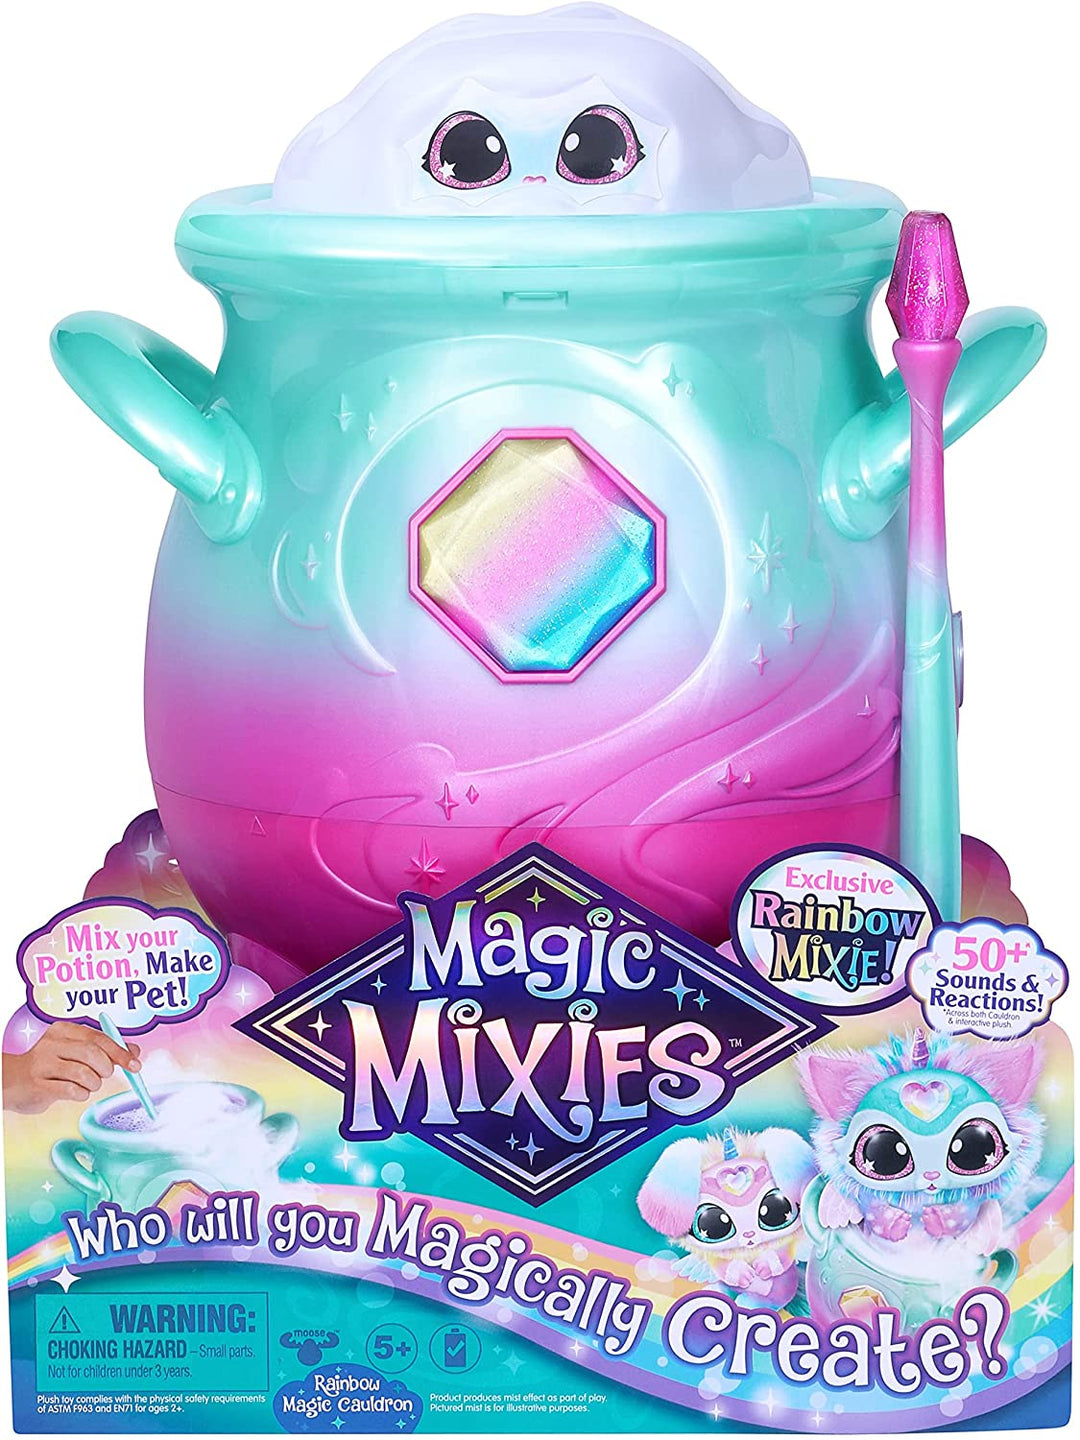 Magic Mixies - Magical Mist and Spells Refill Pack for Magic Cauldron,  Multicolor